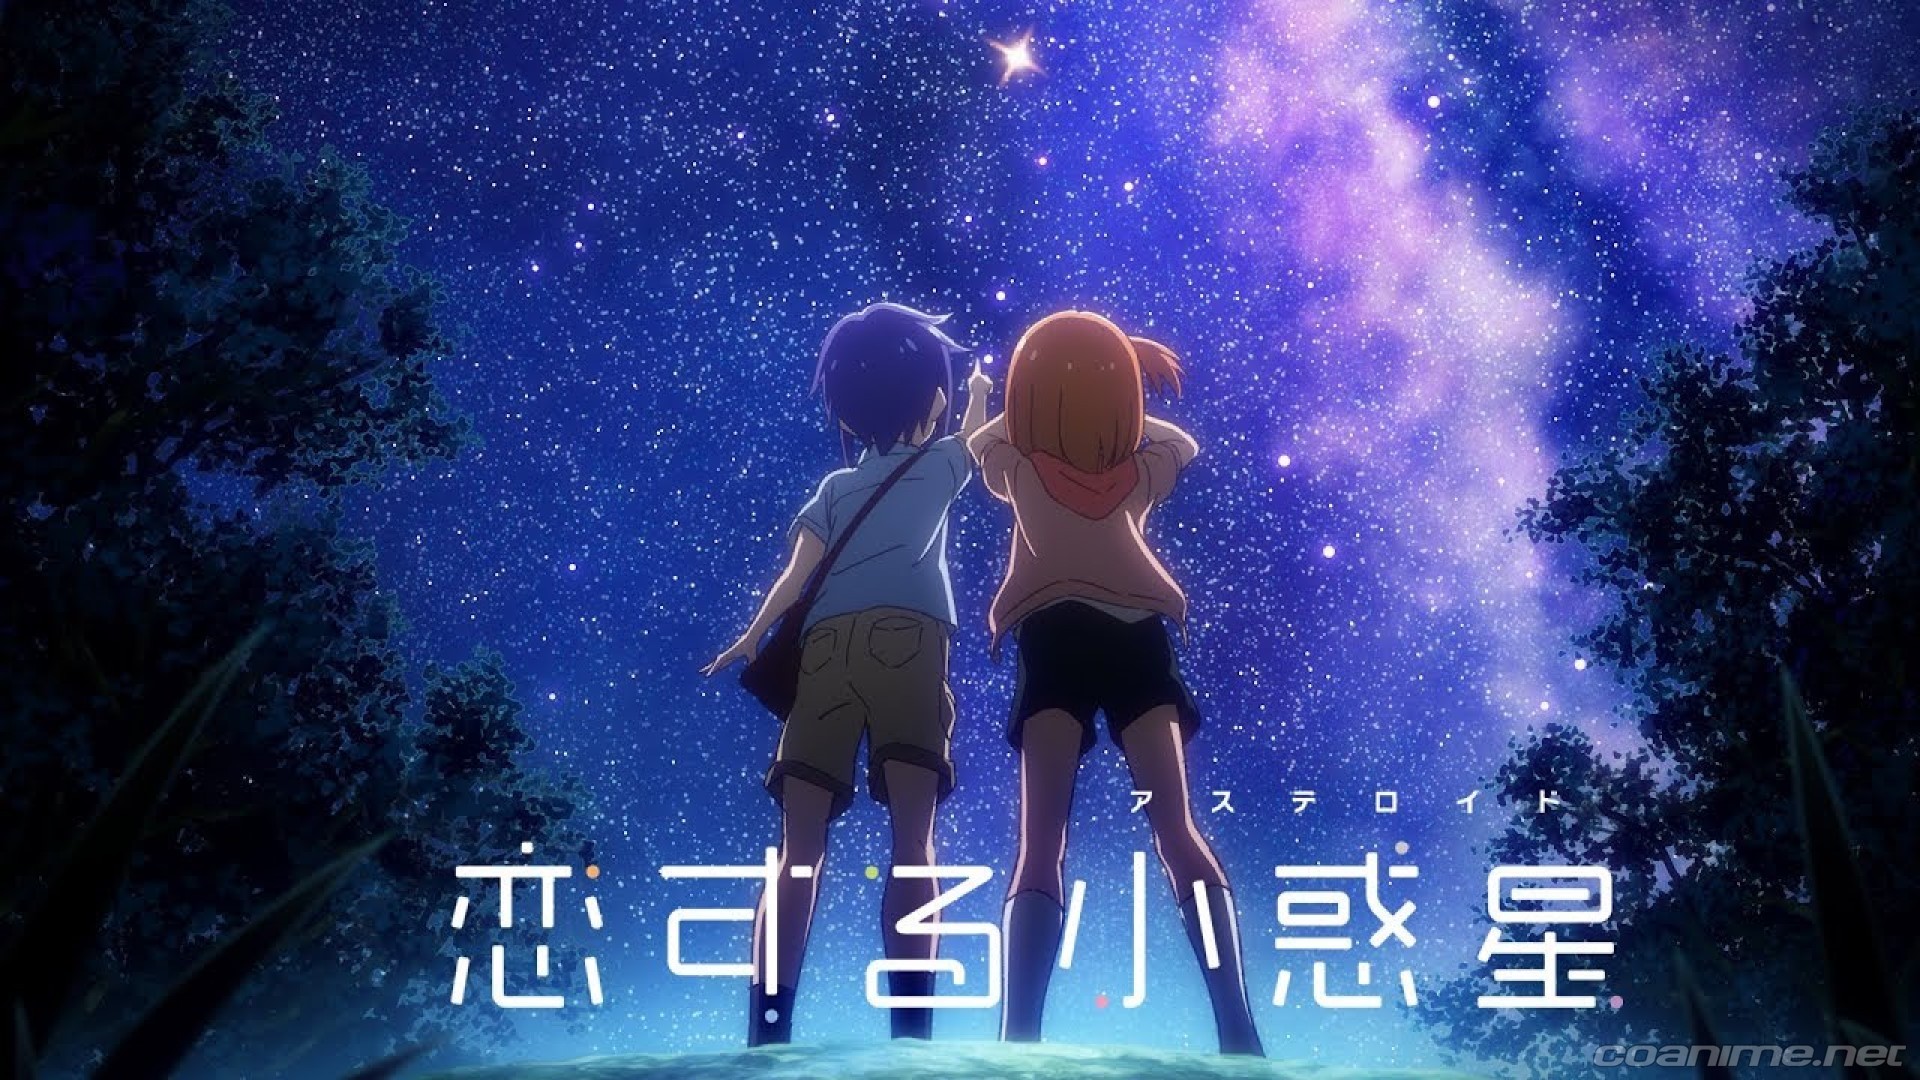 Nuevo material para el nuevo Anime Koisuru Asteroid - Coanime.net